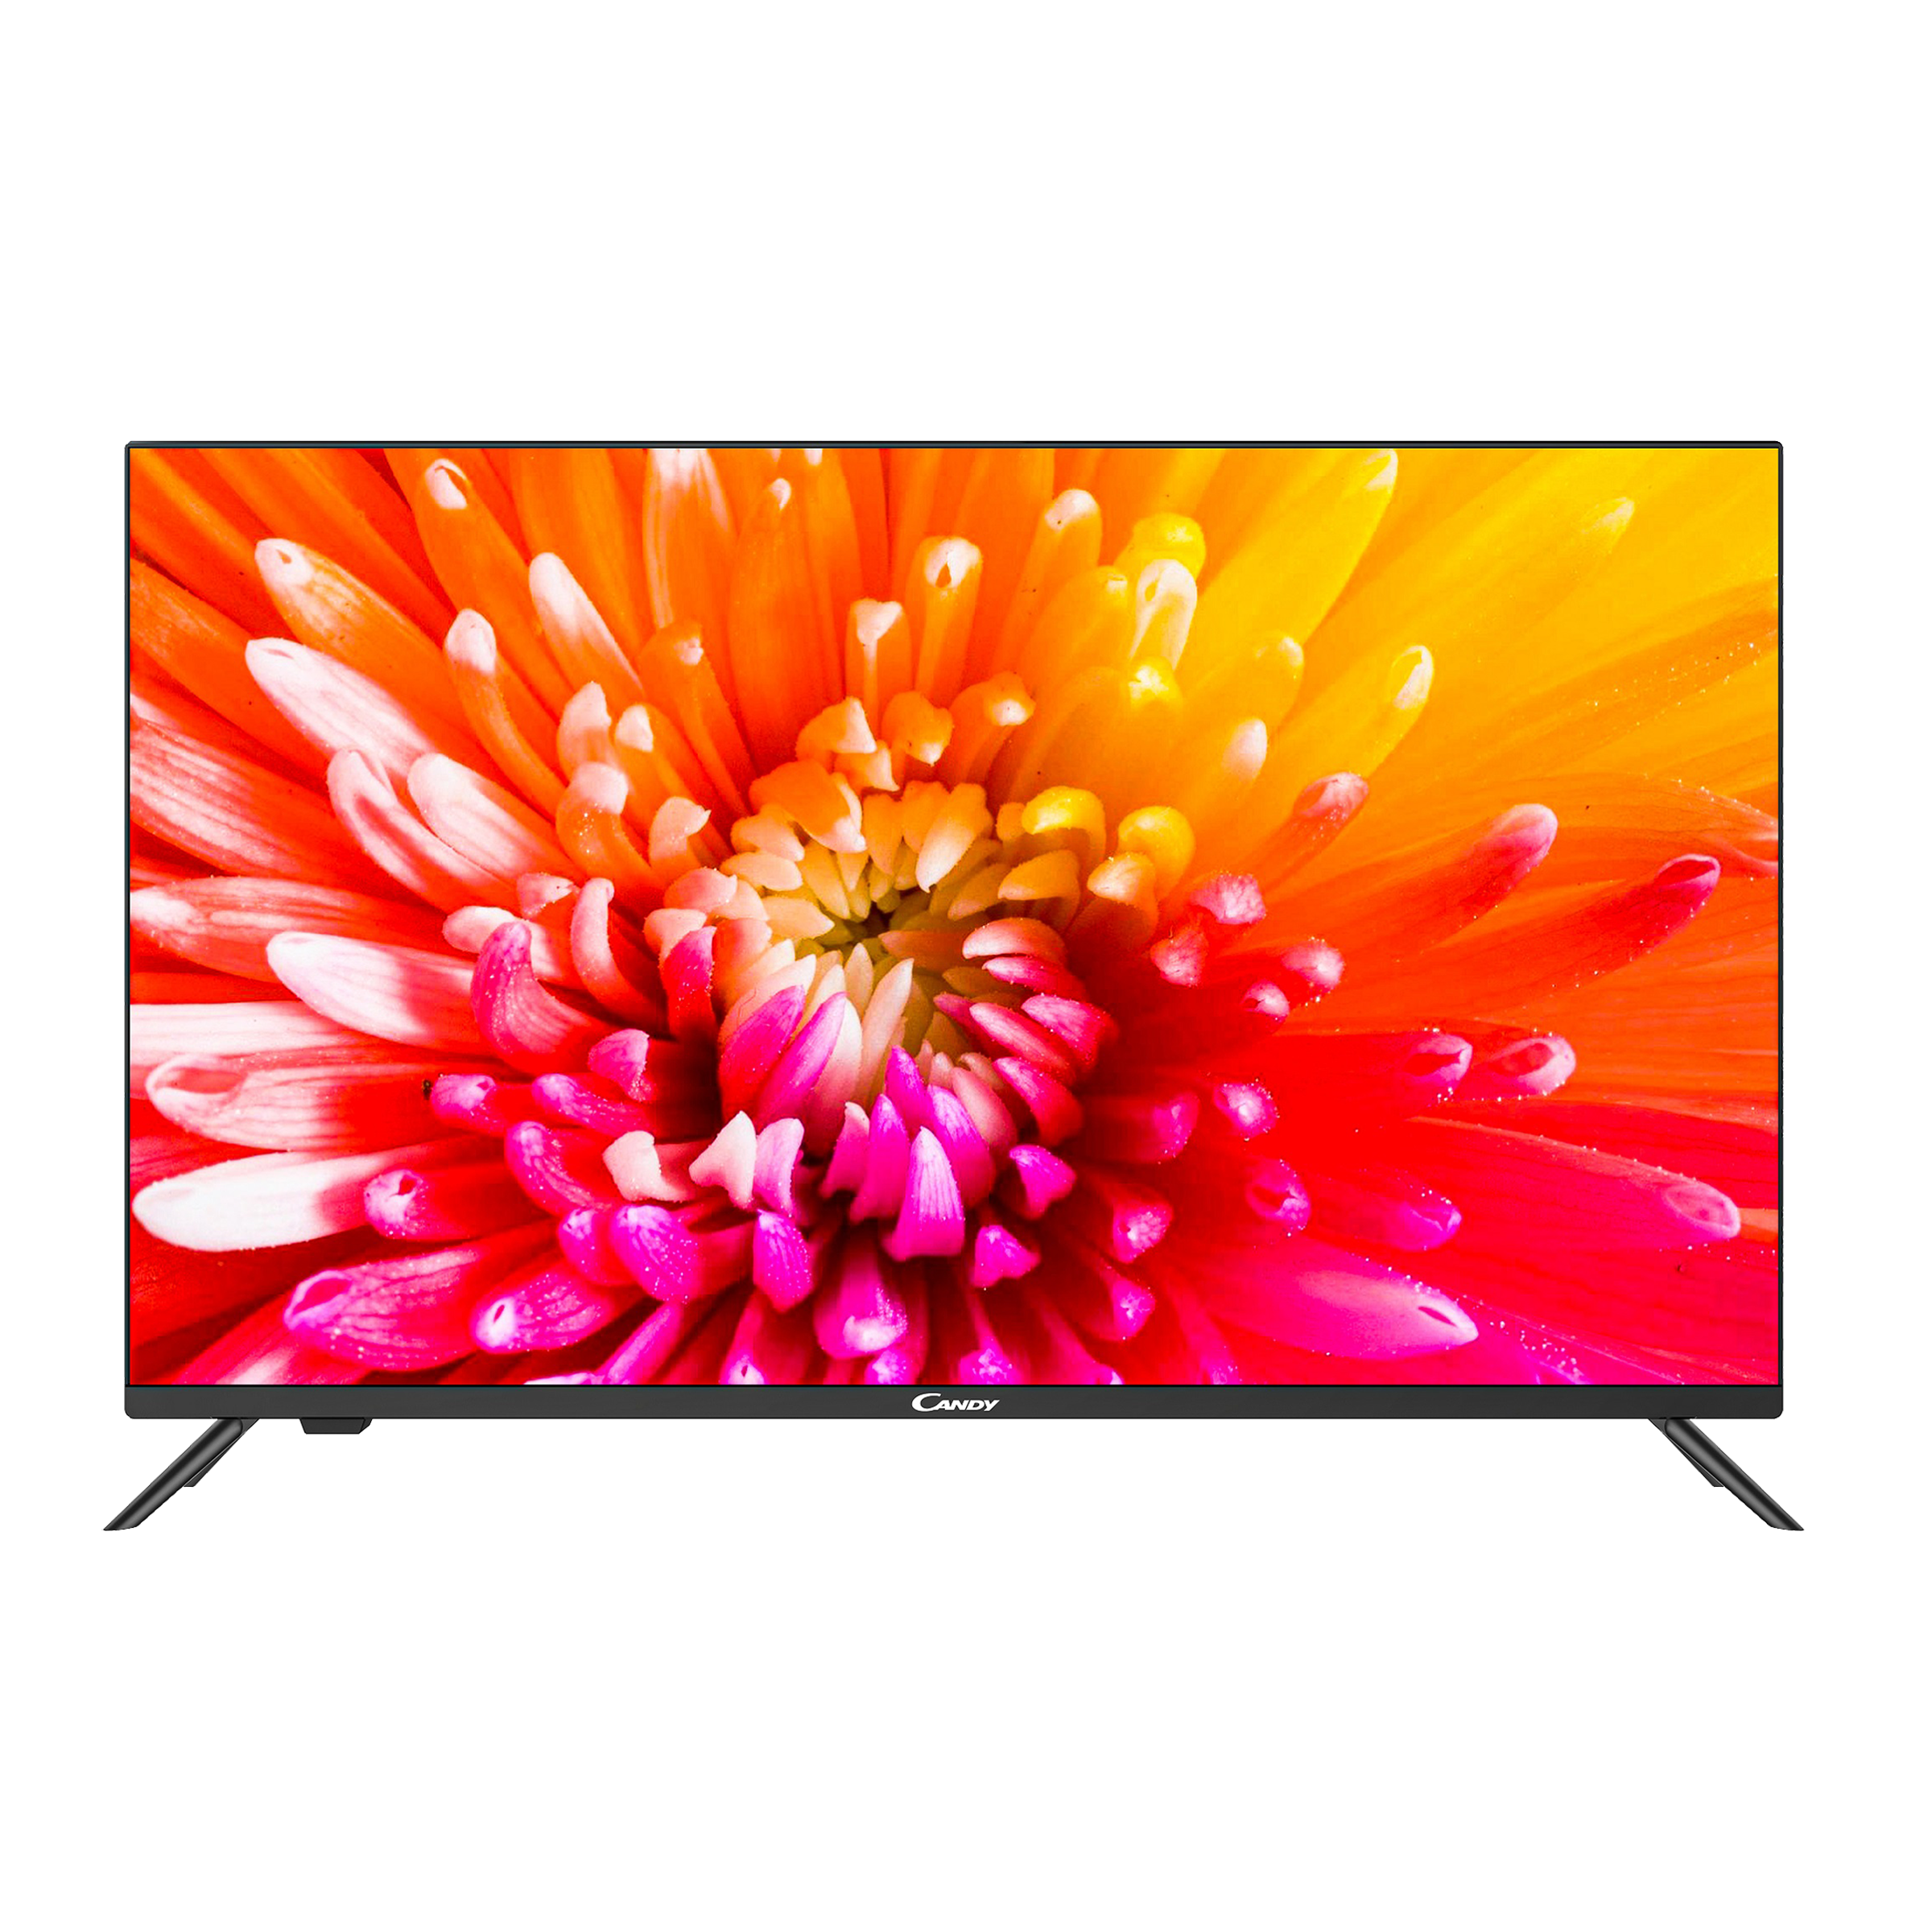 Candy KA66 80cm (32 Inch) LED HD Ready Smart TV (Android 9.0, C32KA66, Black)_1